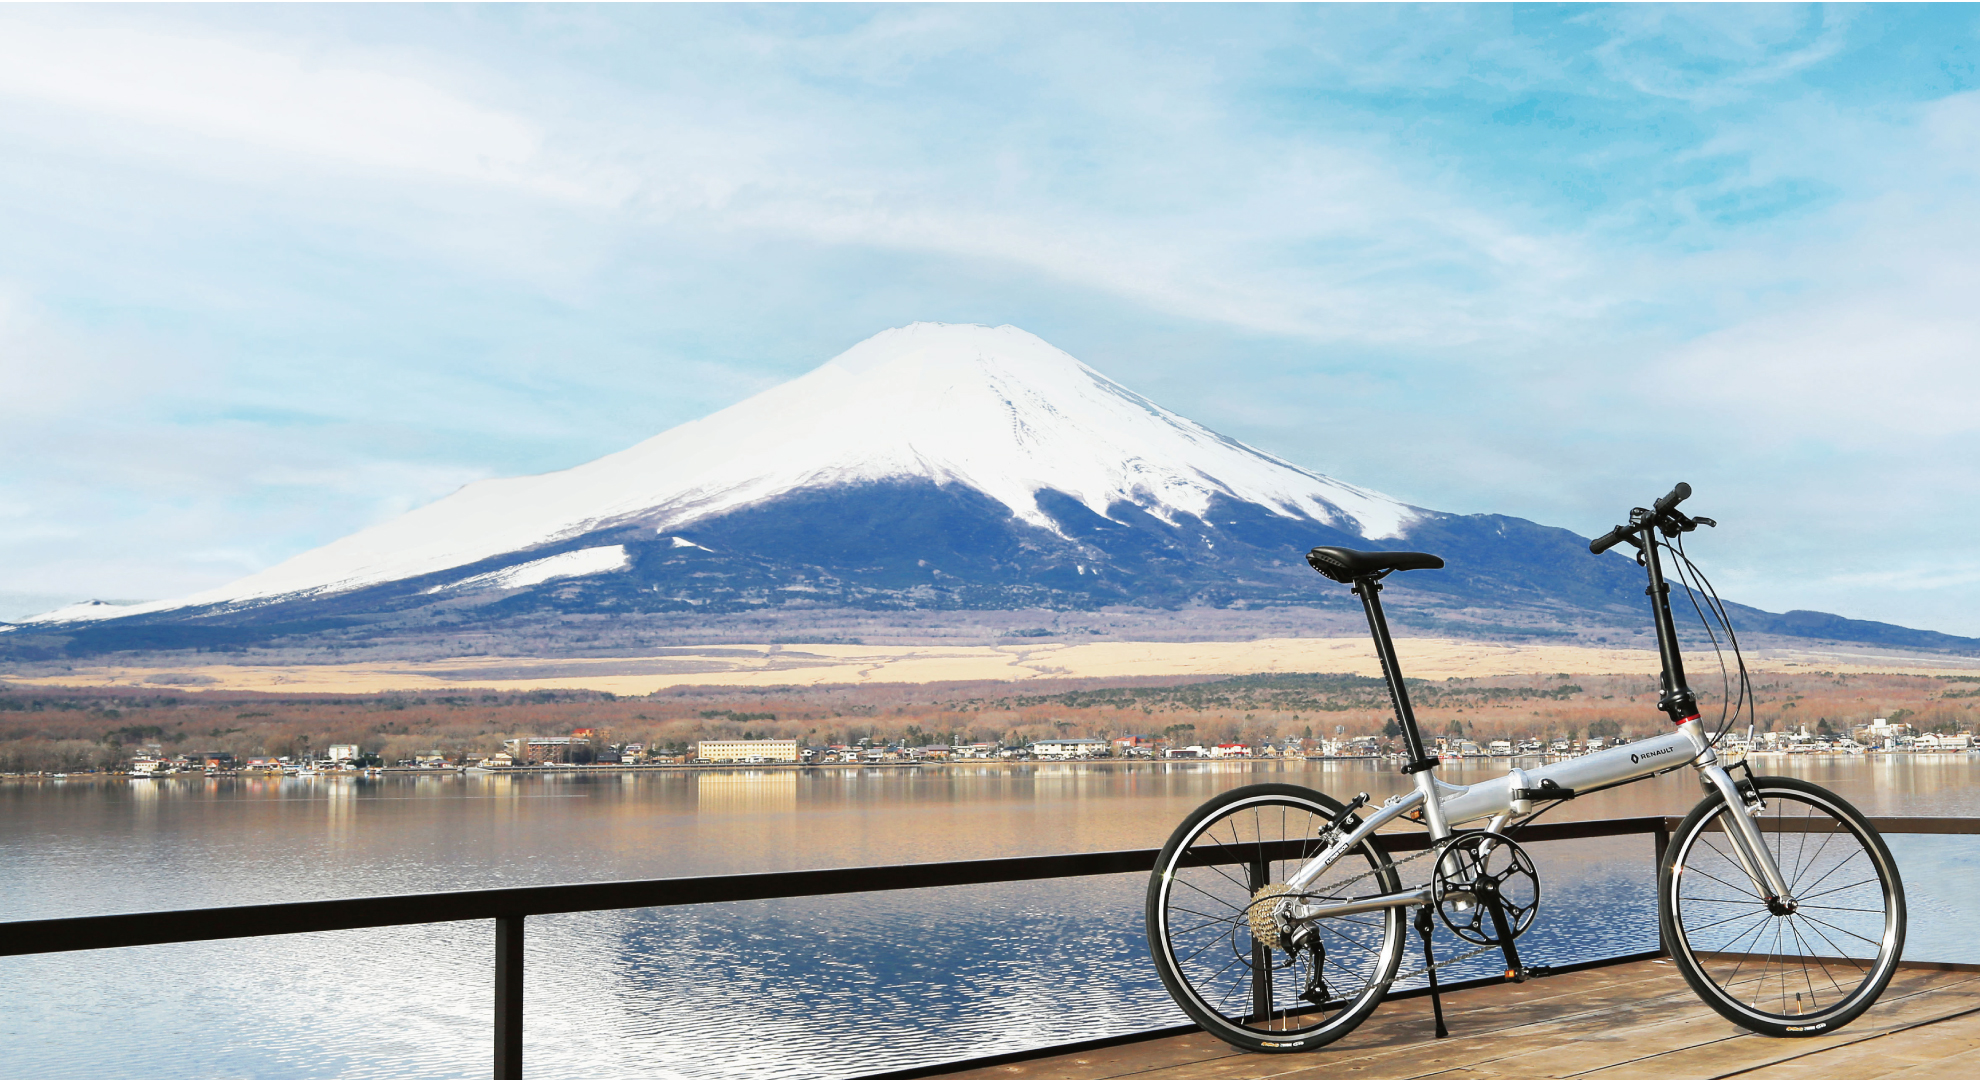 RENAULT BIKES OFFICIAL SITE｜ルノー自転車 オフィシャルサイト